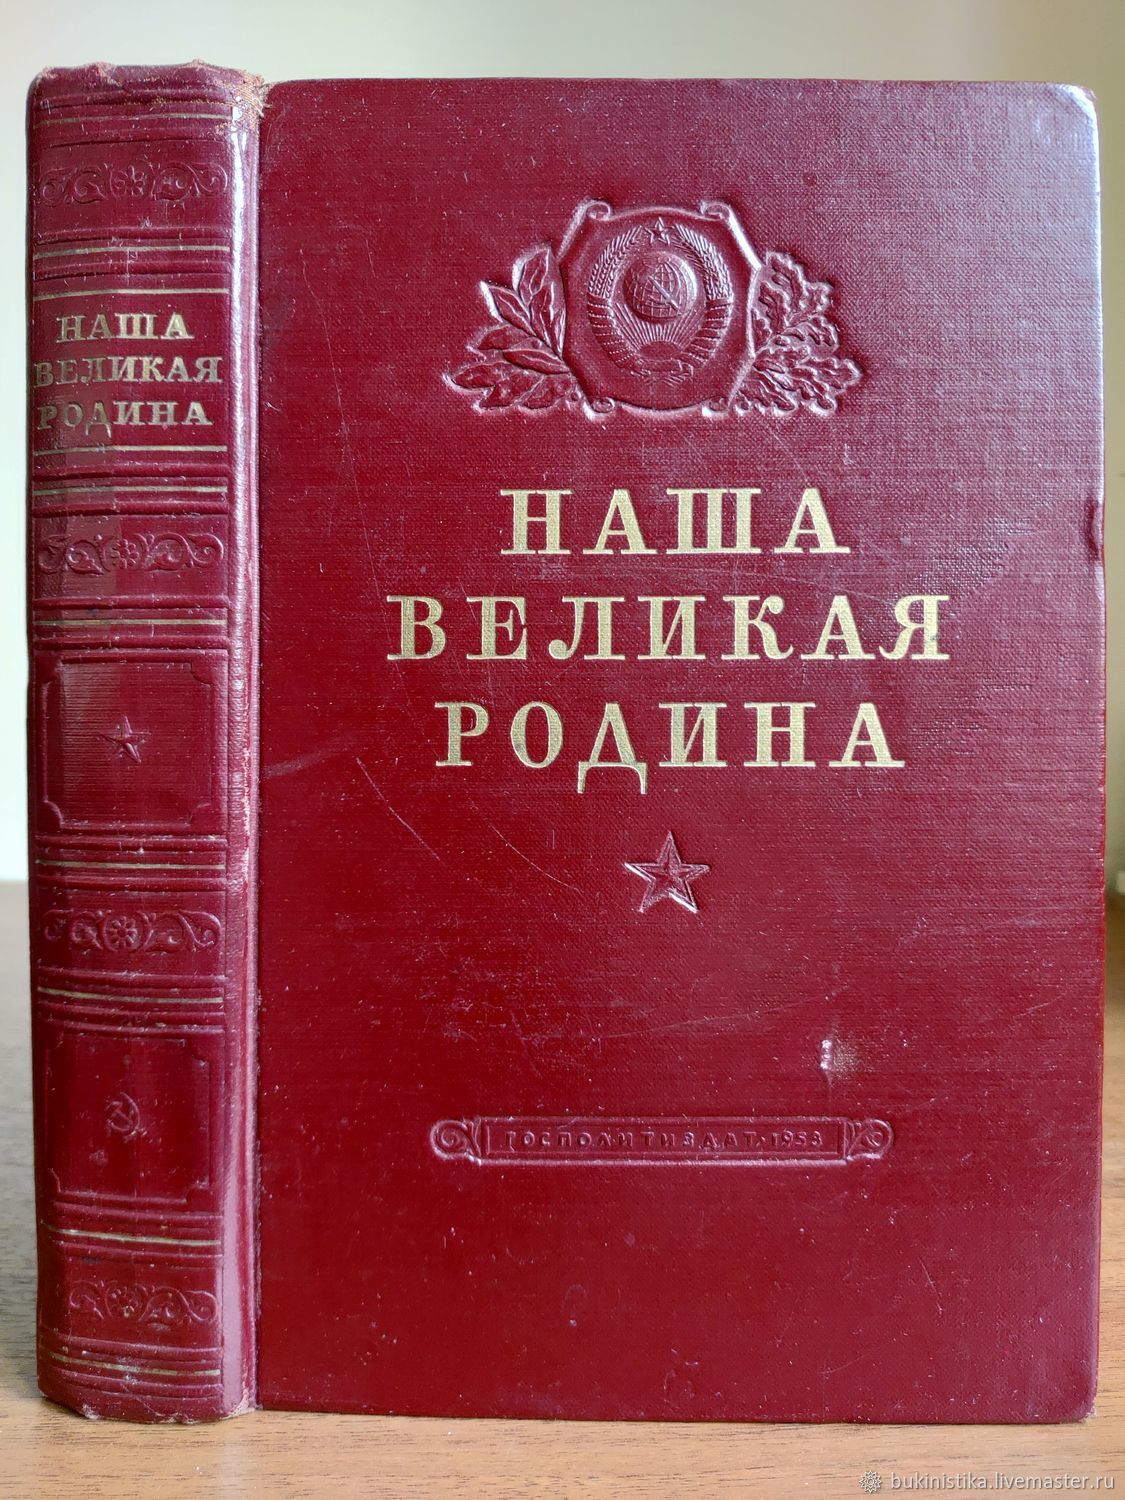 Книга 1953 года. Цена книг 1953 года.